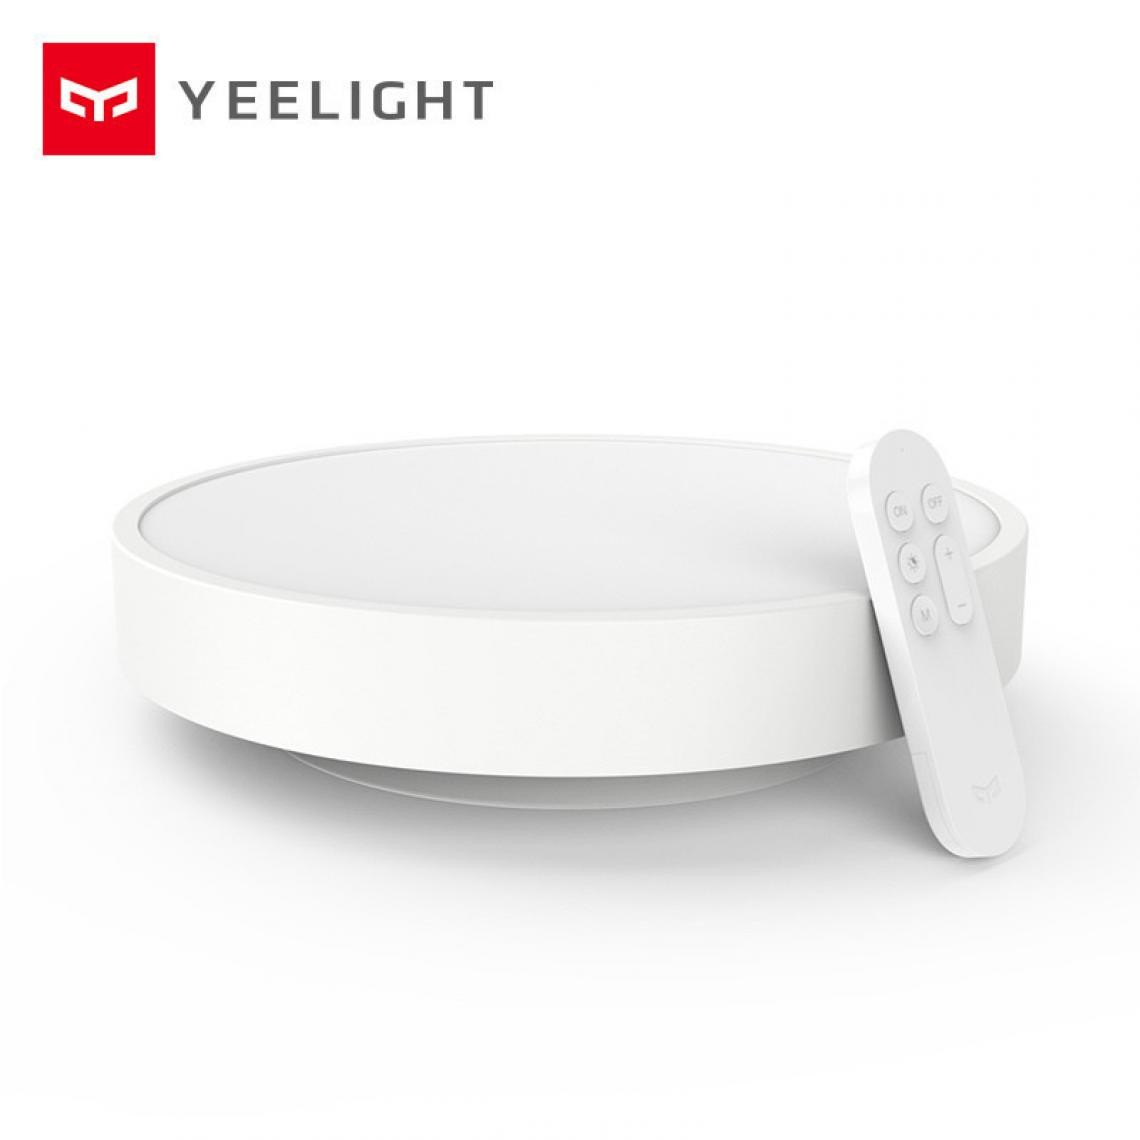 Yeelight - Plafonnier moderne Xiaomi Yeelight LED 320 version améliorée Blanc compitable avec Homekit et Mijia - Lampe connectée